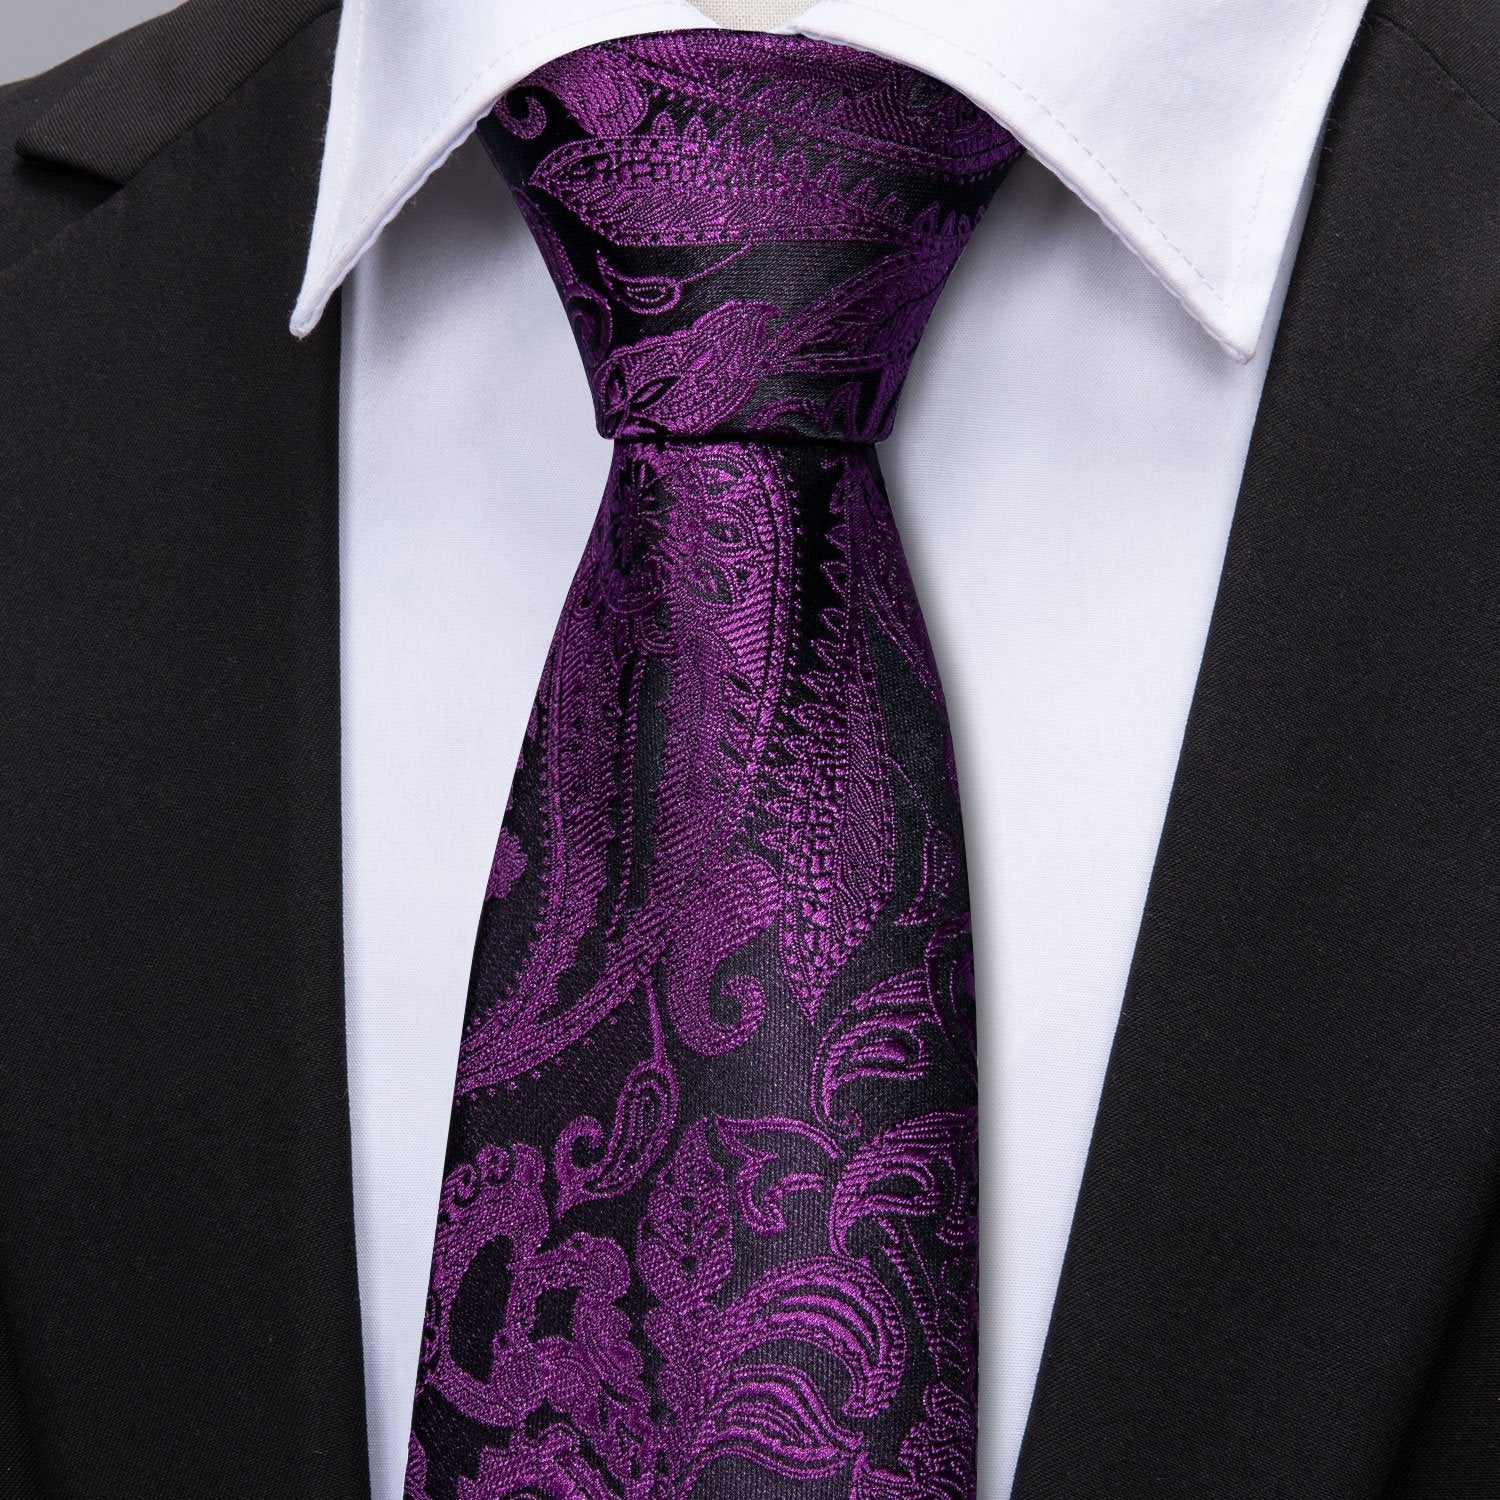 Black Purple Paisley Necktie Pocket Square Cufflinks Set - barry-wang